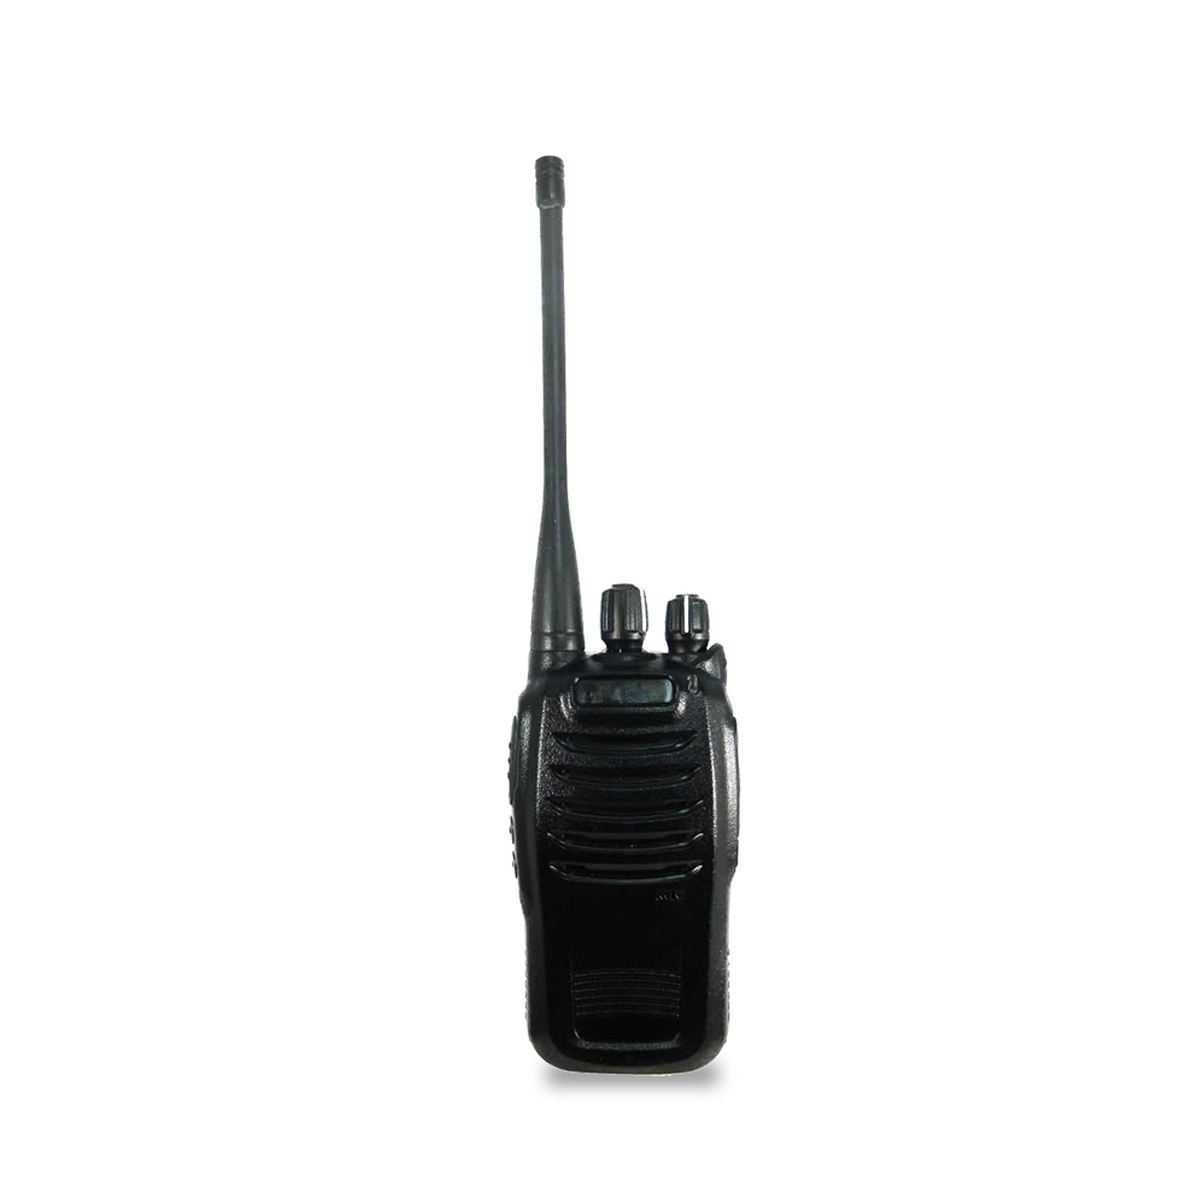 Radio Genérico TH-2800 Analógico VHF 136-174 MHz